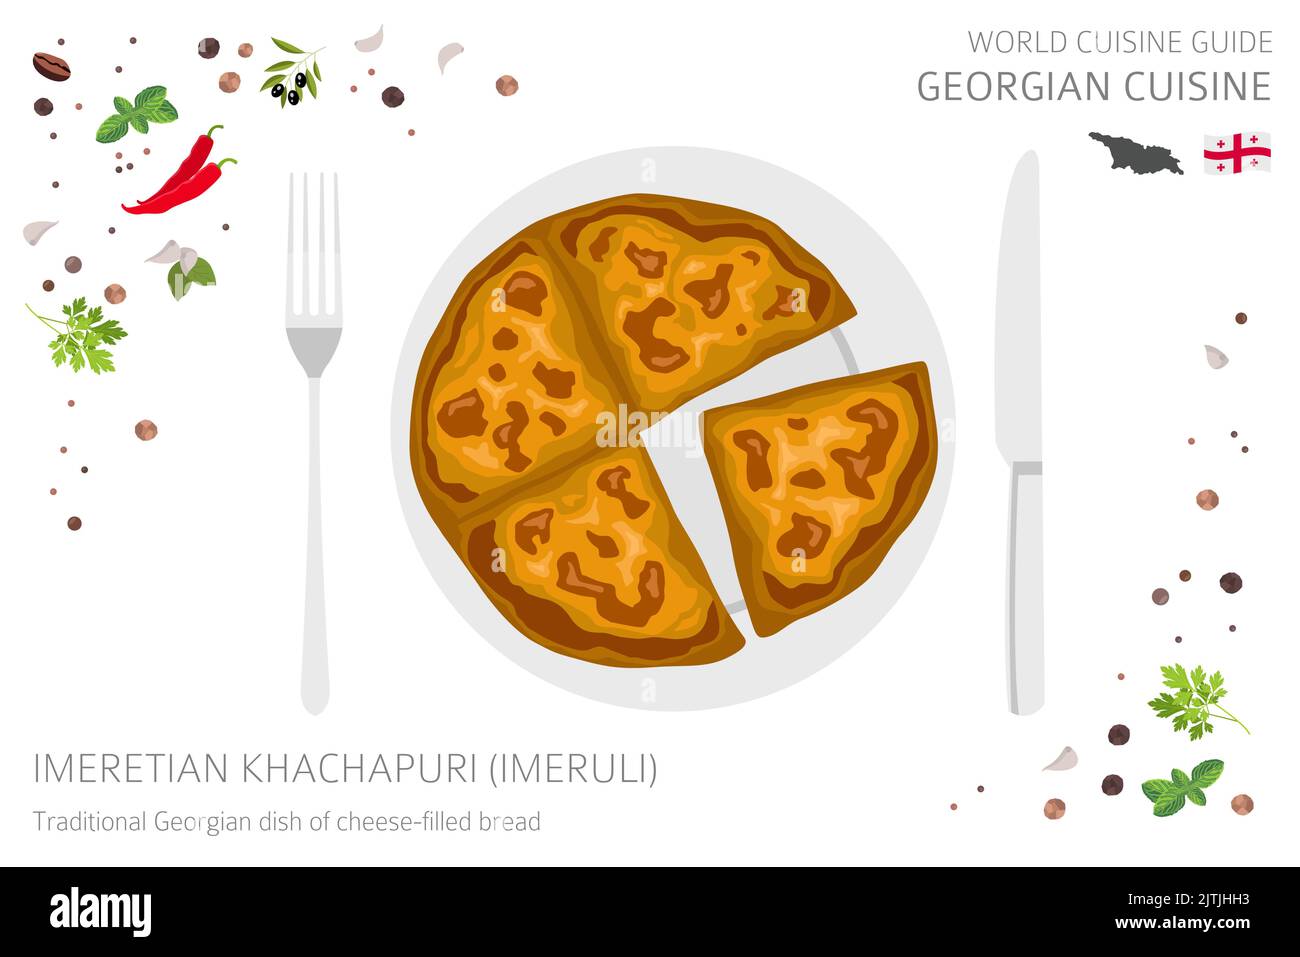 World cuisine guide. Georgian cuisine. Imeretian khachapuri, imeruli bread isolated on white, infographic. Vector illustration Stock Vector